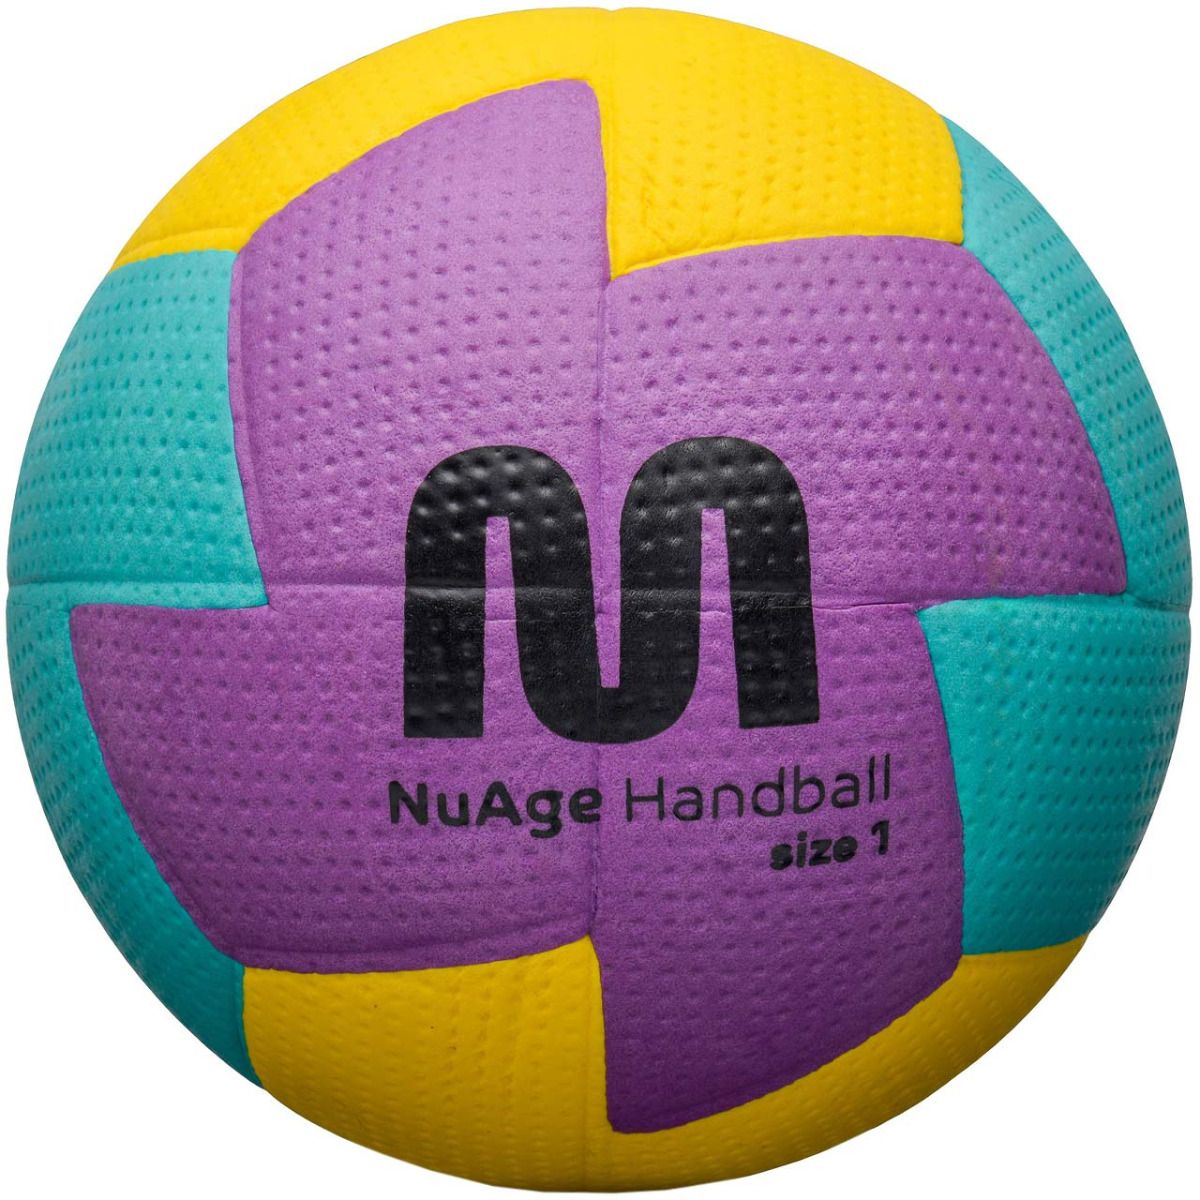 Meteor Handball Junior Nuage 1 16691